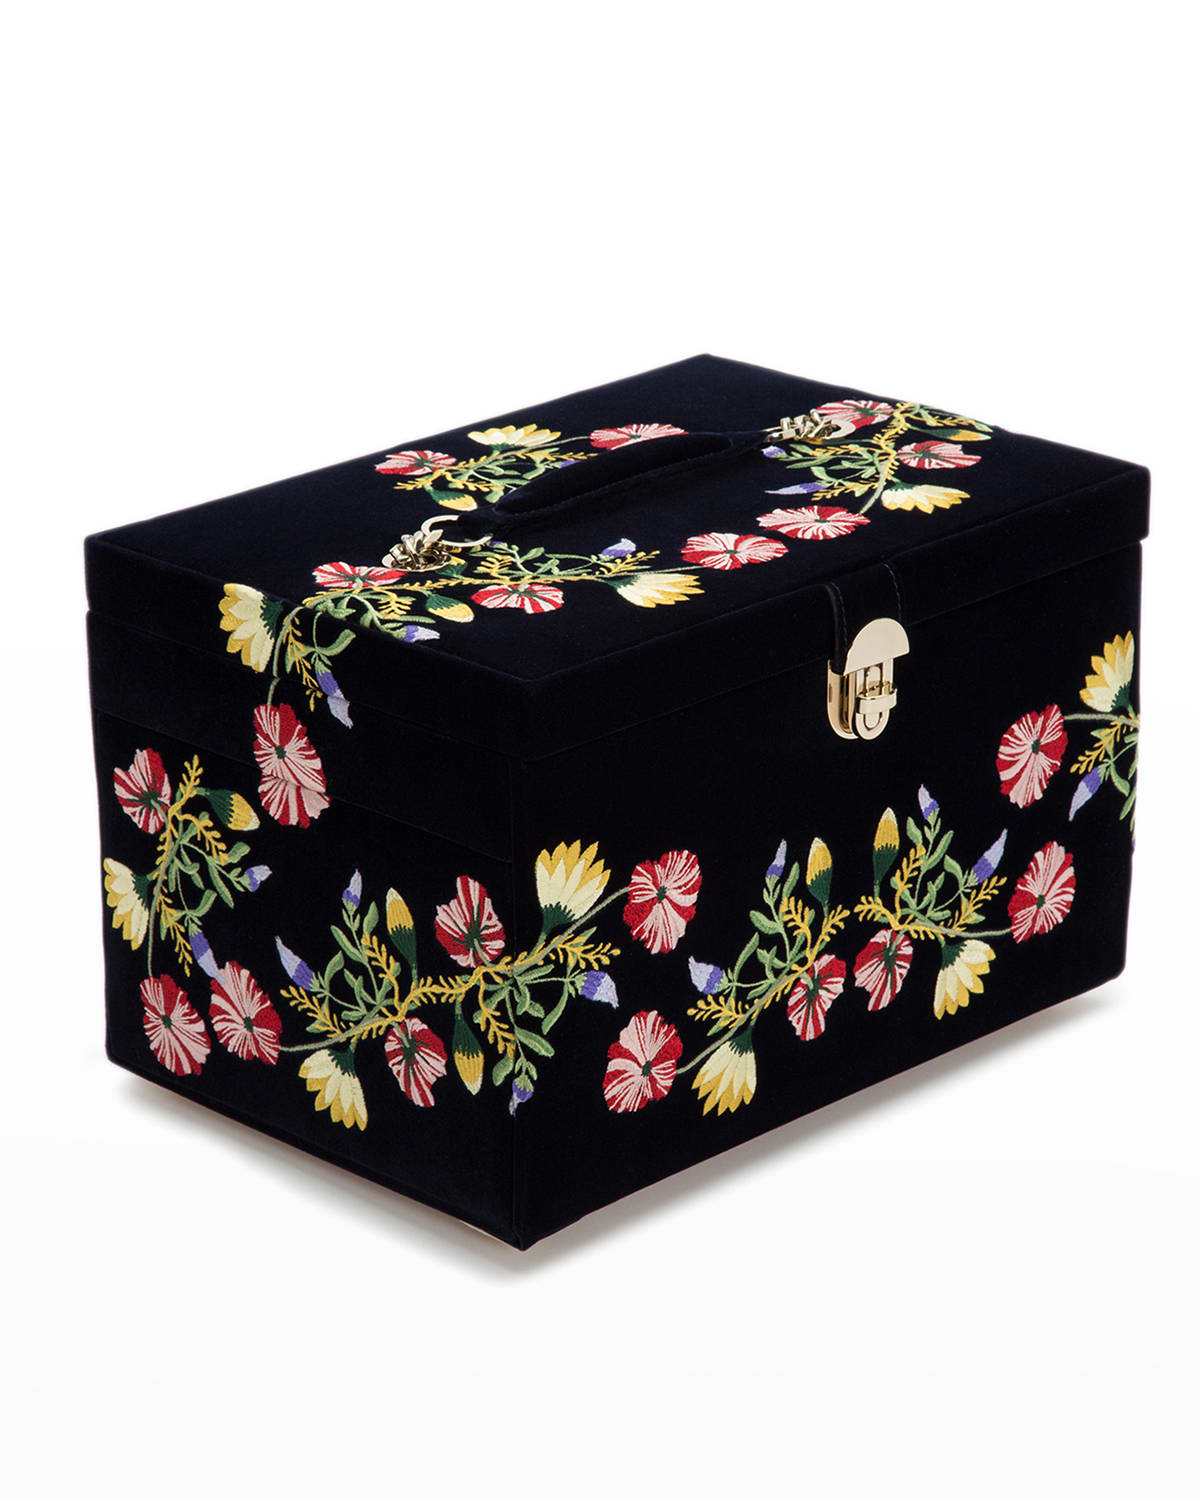 Vintage plastic oval jewelry red box-Trinket box-Storage box-Organizer-Transparent cover floral pattern-Keepsake box-Memory box-Valuables